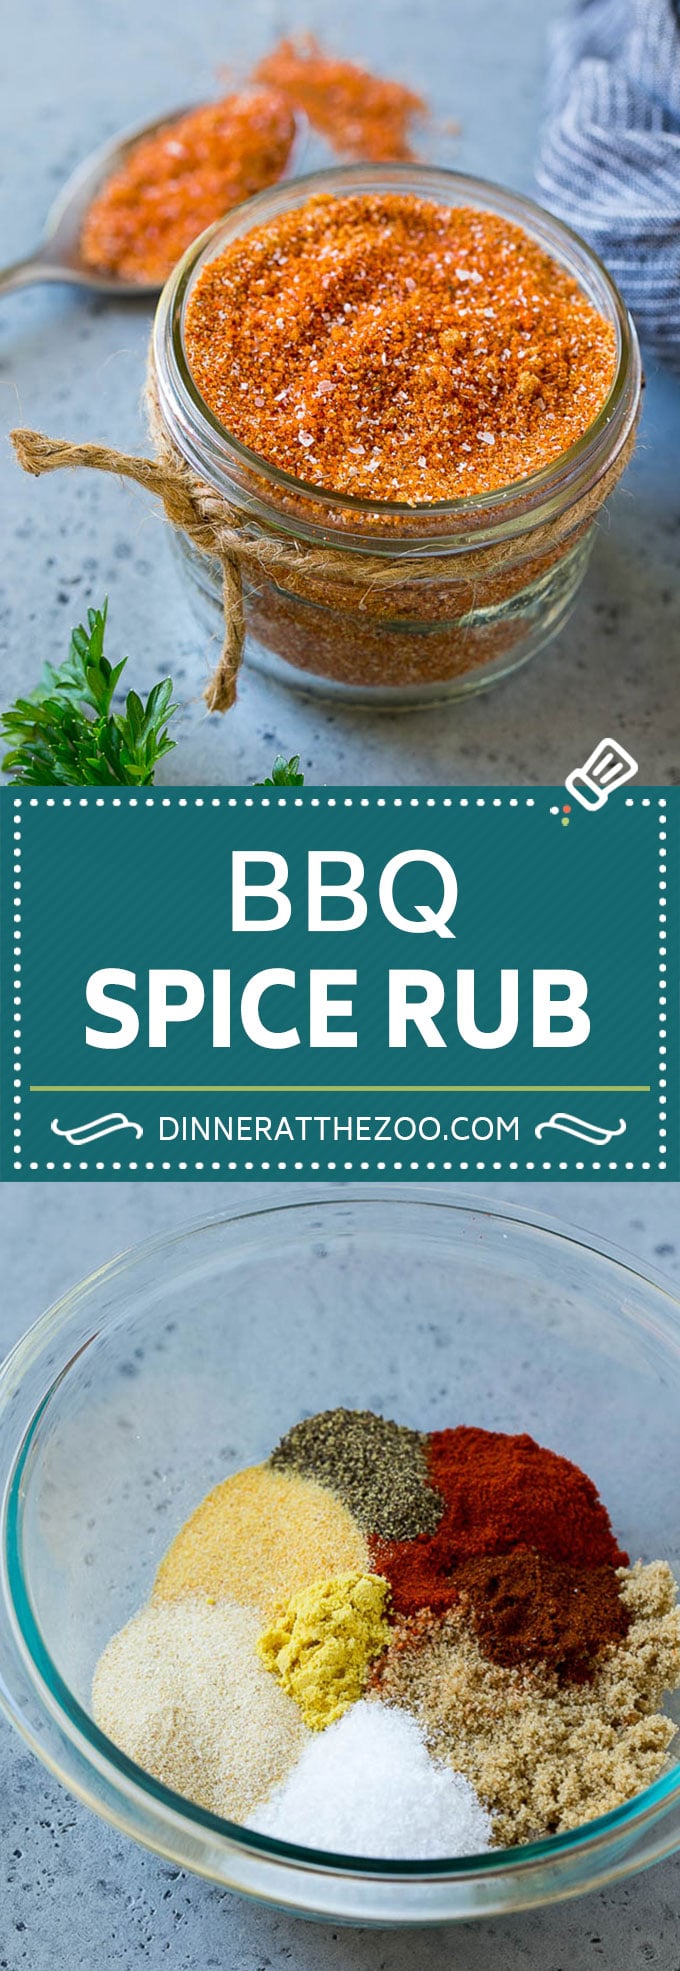 BBQ Rub Recipe | Homemade Spice Rub | Easy Spice Rub #spices #bbq #grilling #smoking #dinneratthezoo